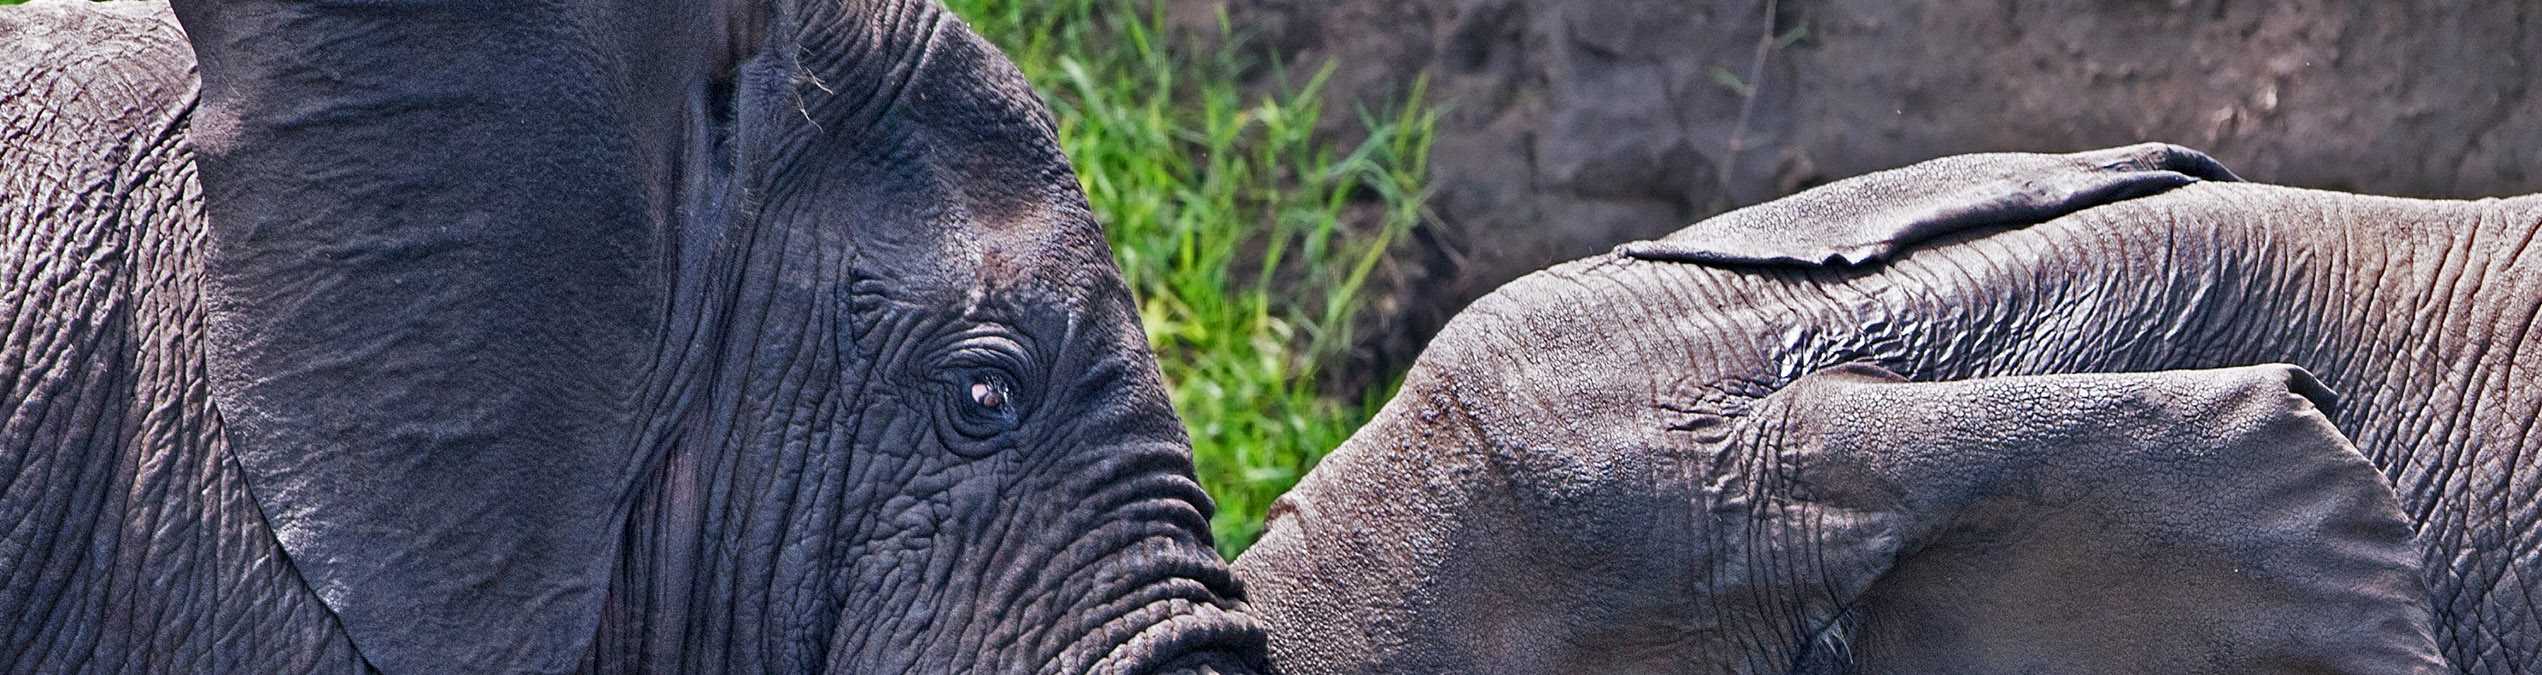 Safari Club - Uganda_Queen_Elizabeth_National_Park_Kazinga_Channel_Bull_Elephants